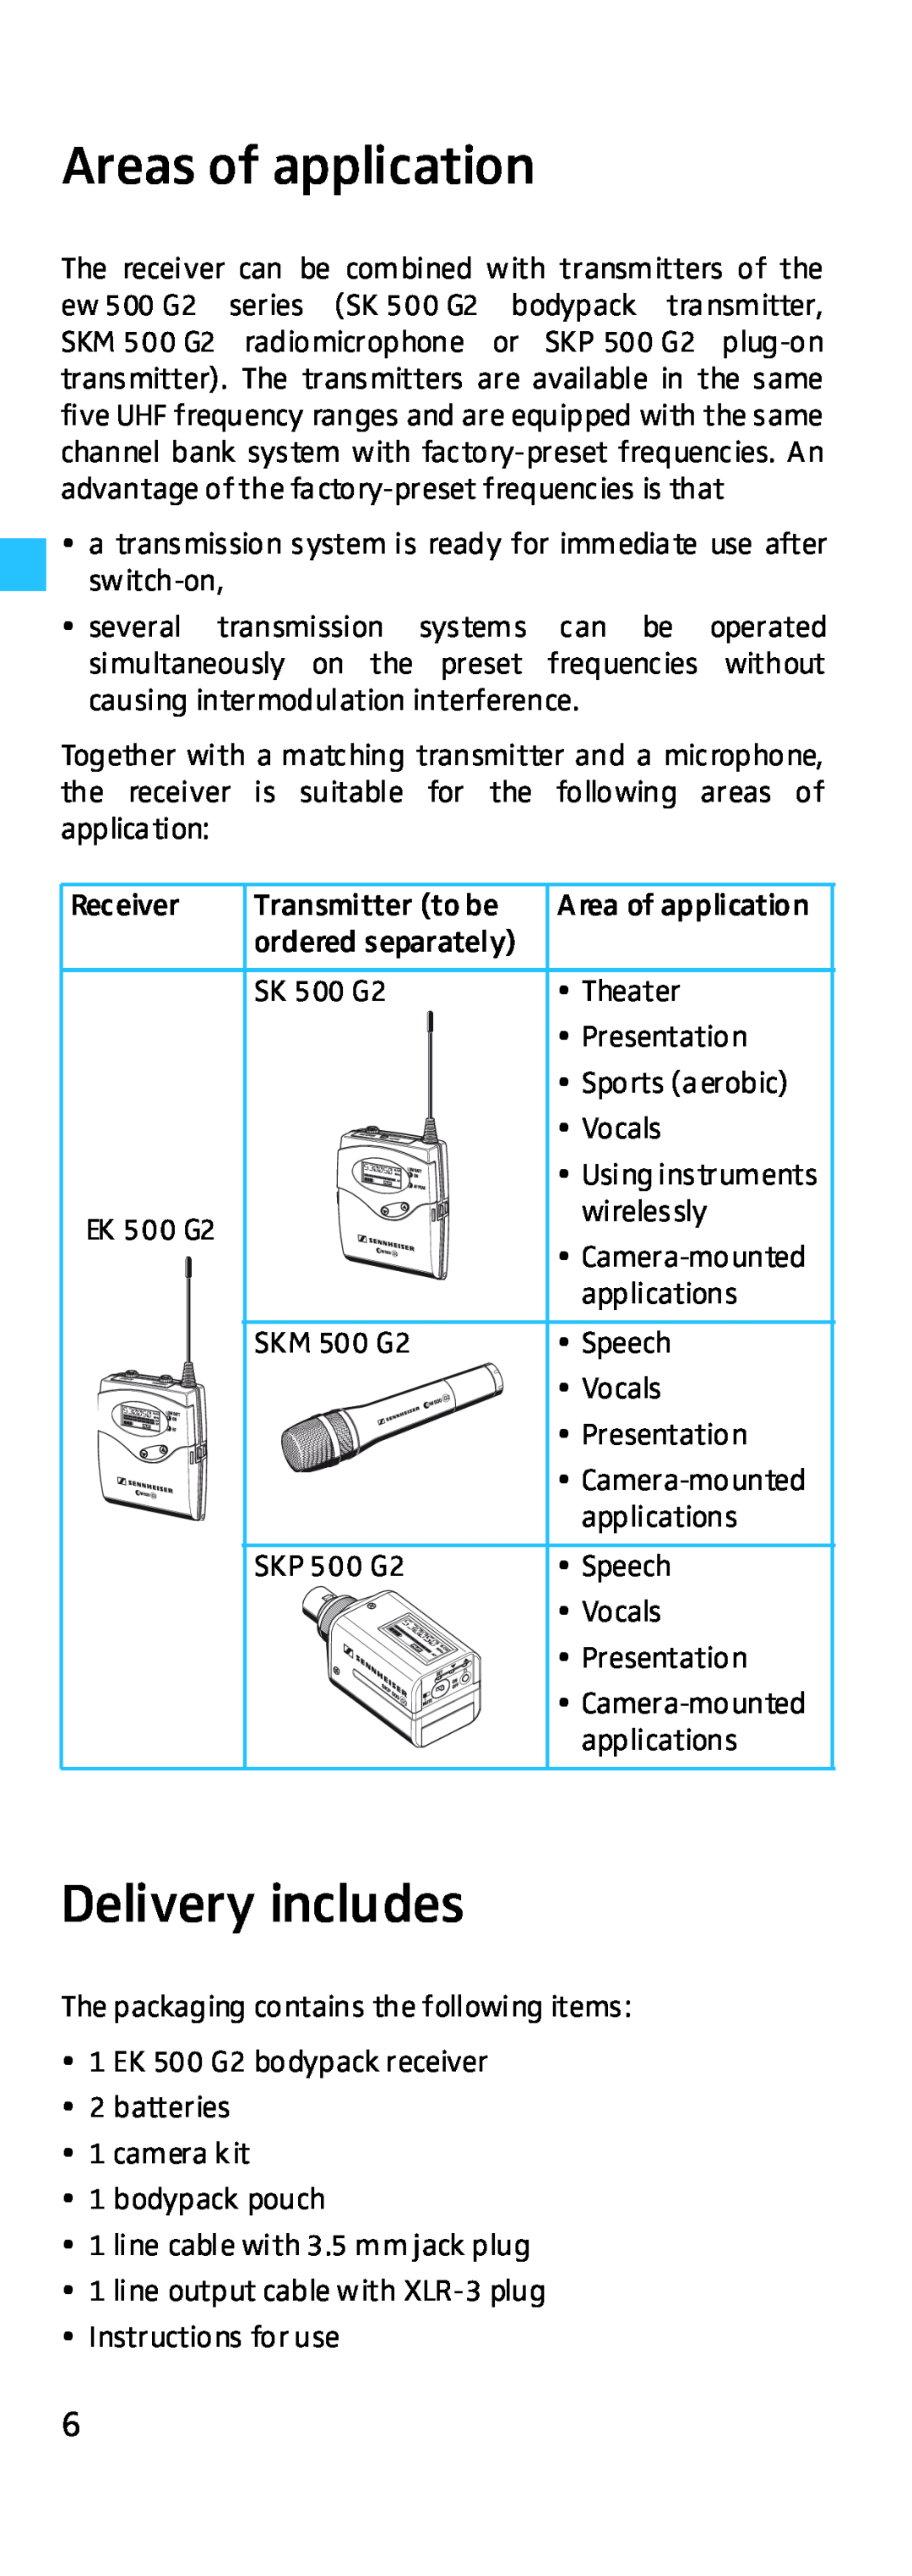 Sennheiser EK 500 G2 manual Areas of application, Delivery includes 